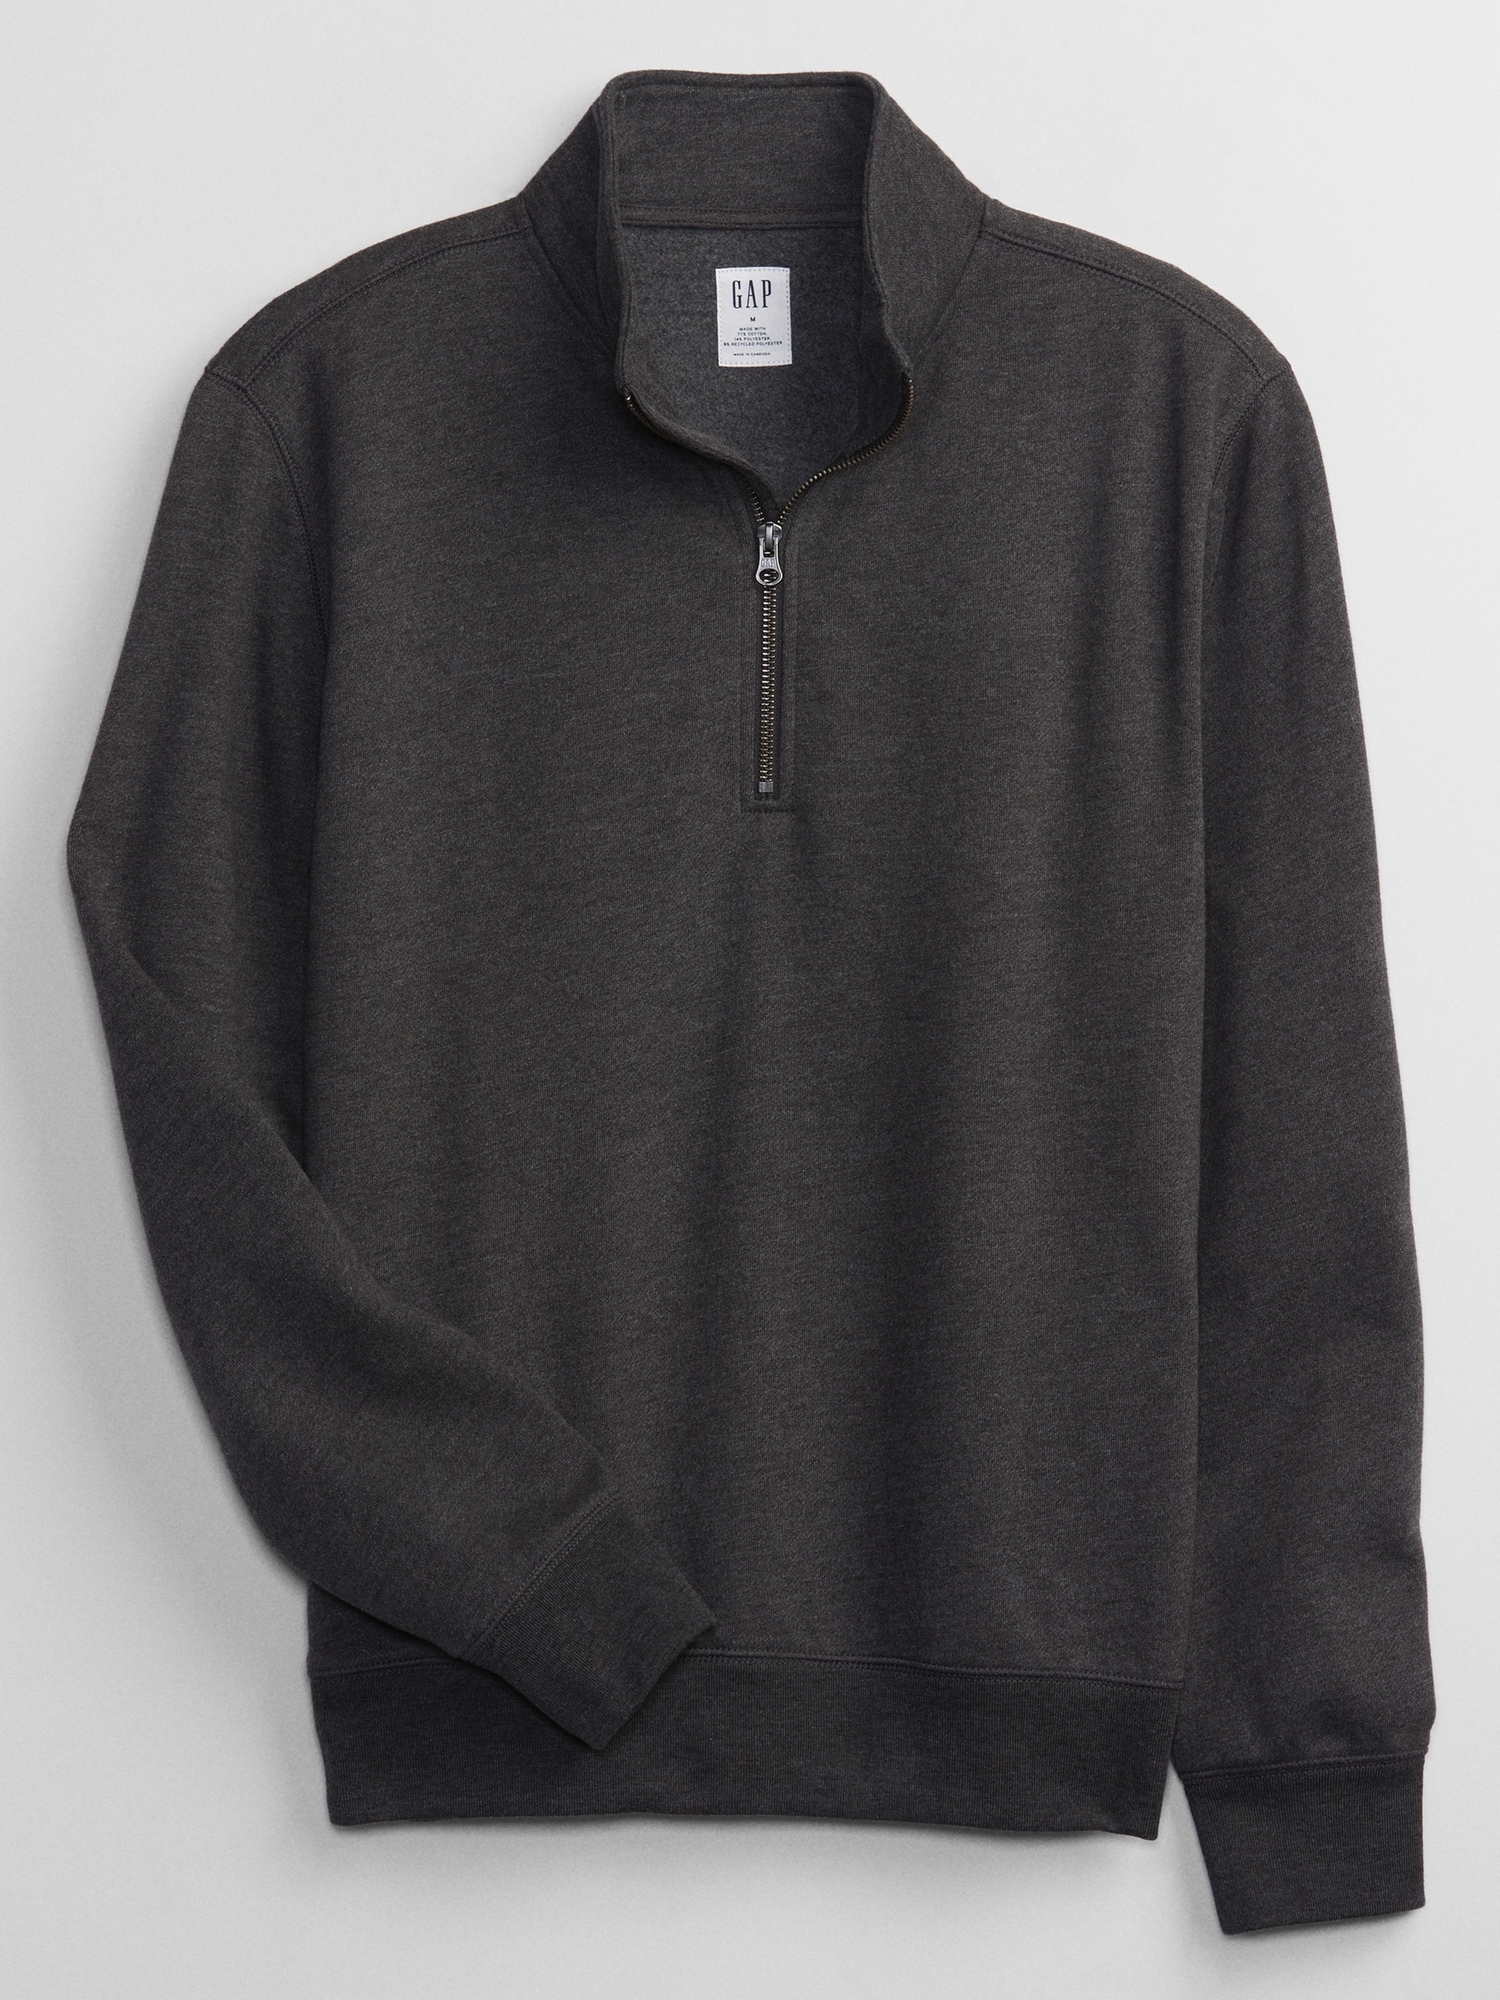 Vintage Soft Half-Zip Sweatshirt | Gap Factory